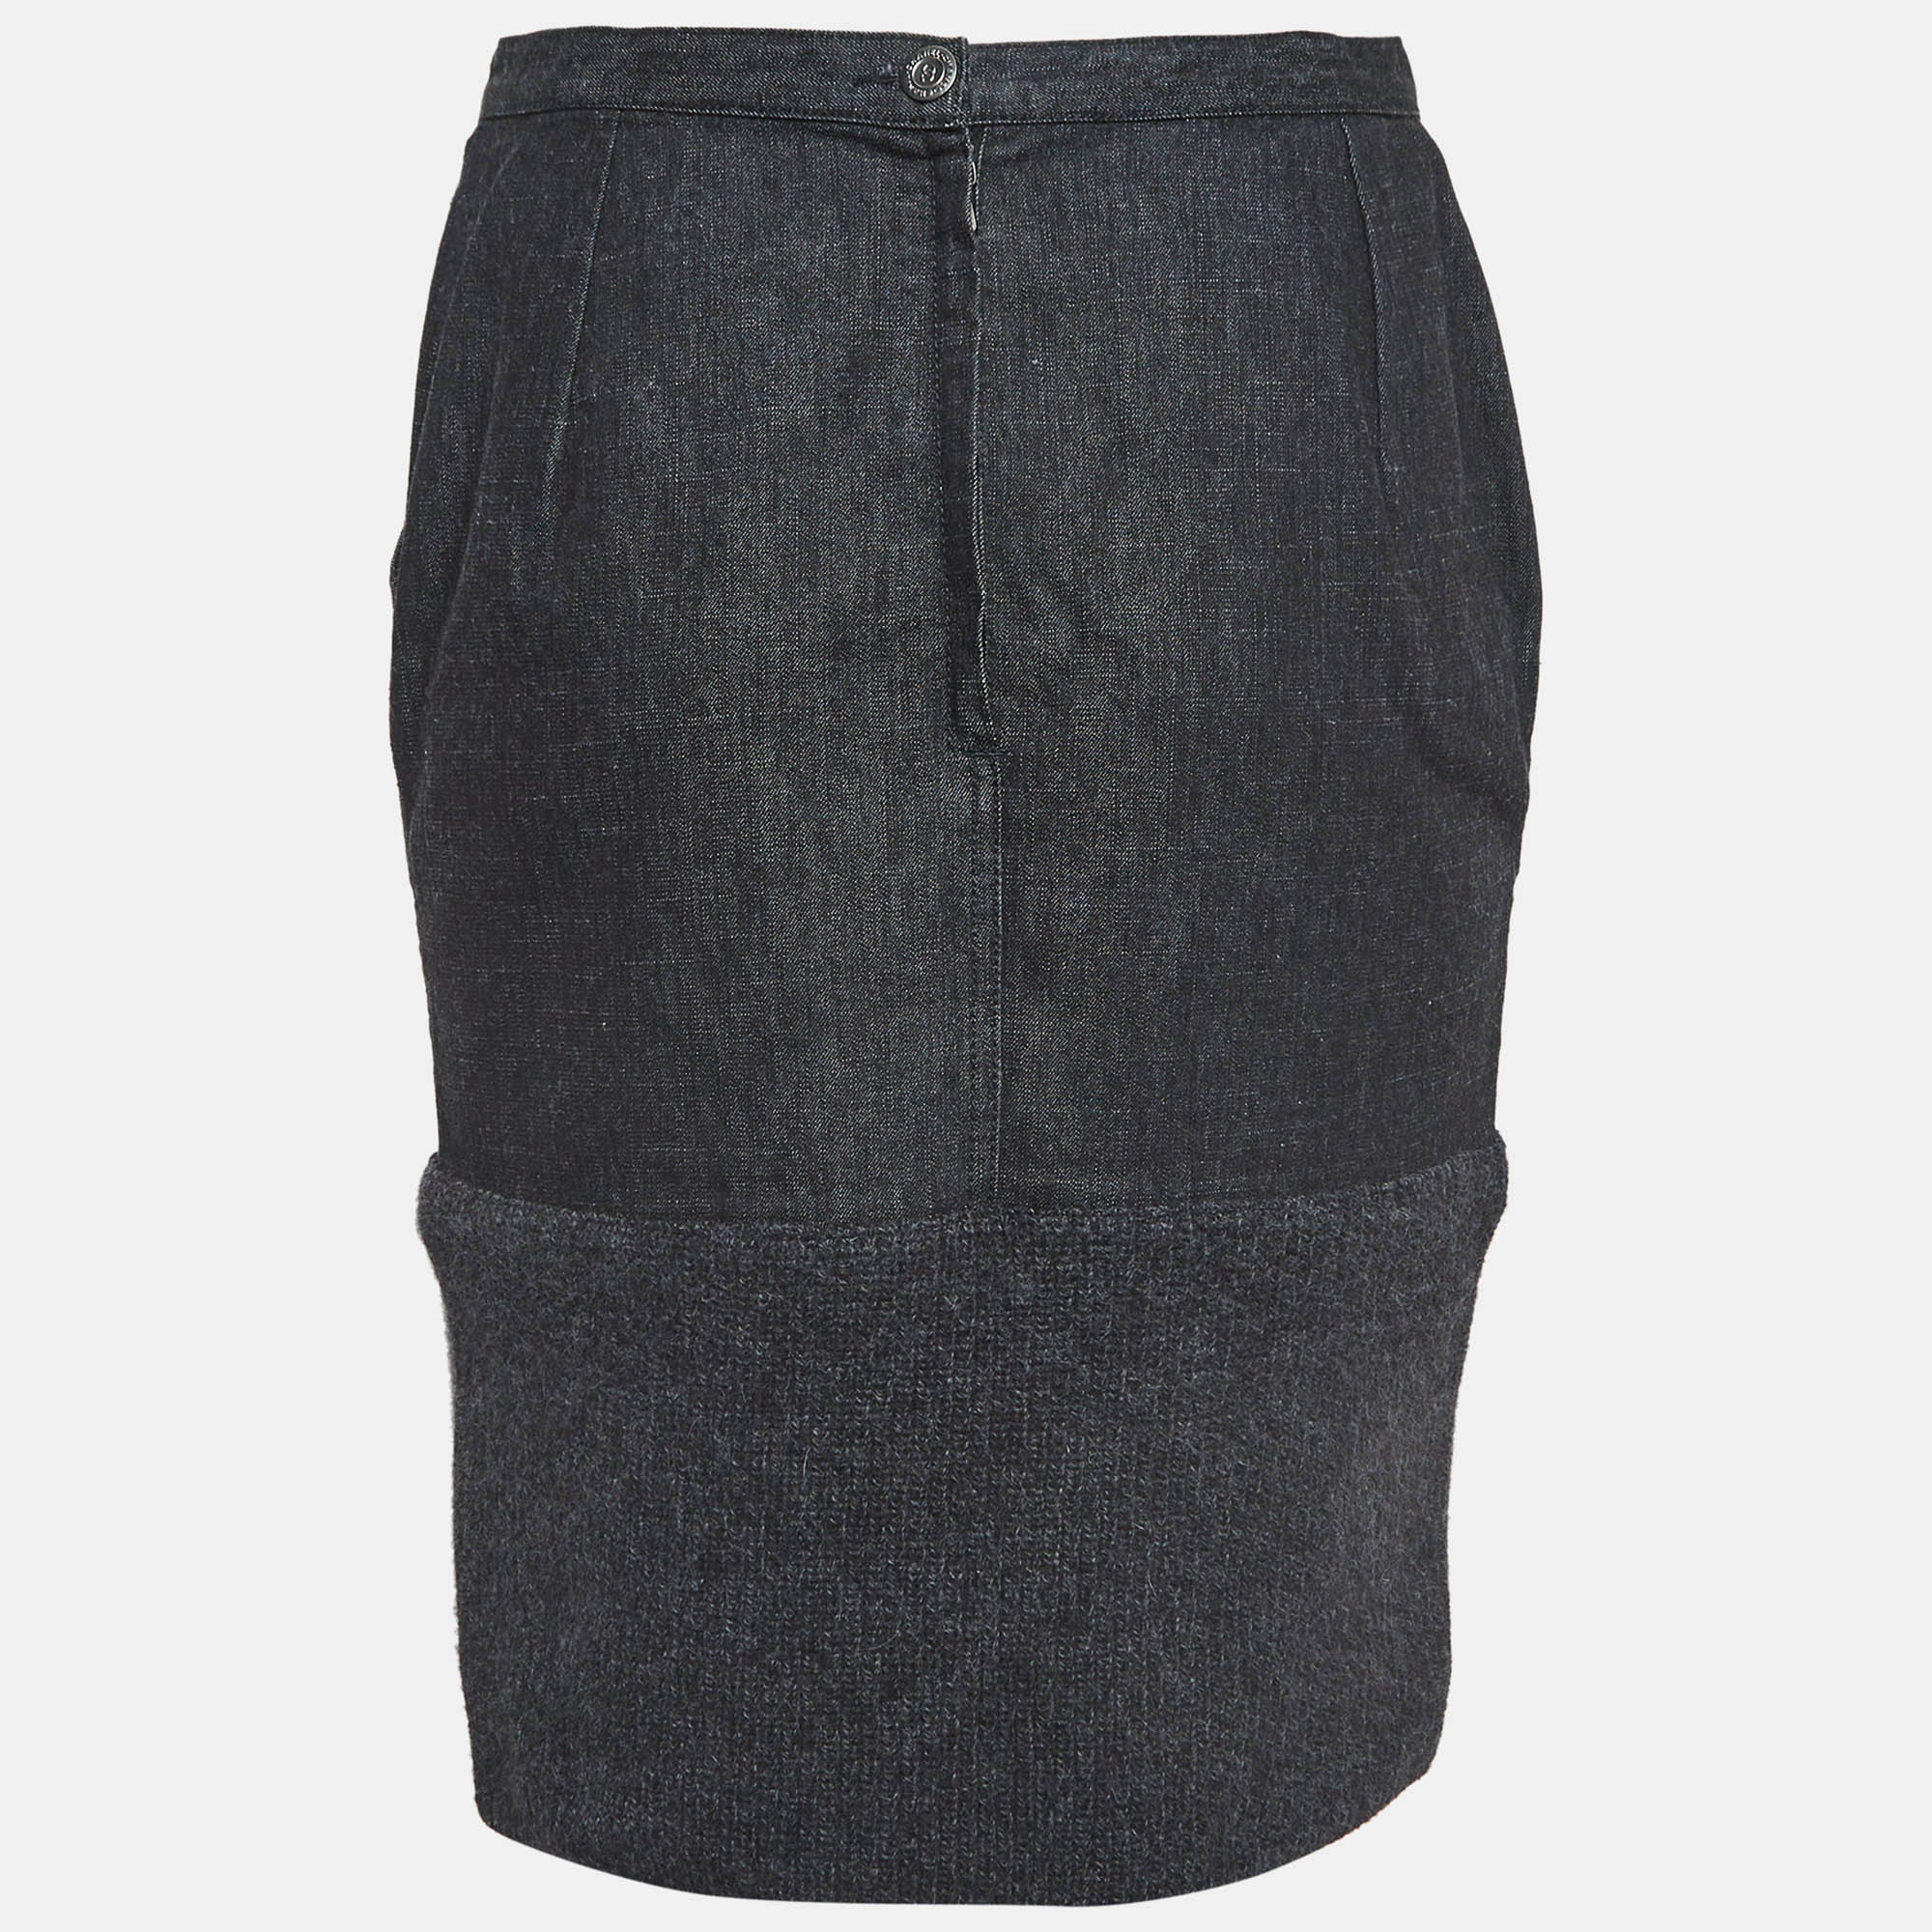 Chanel black denim & wool pencil skirt m